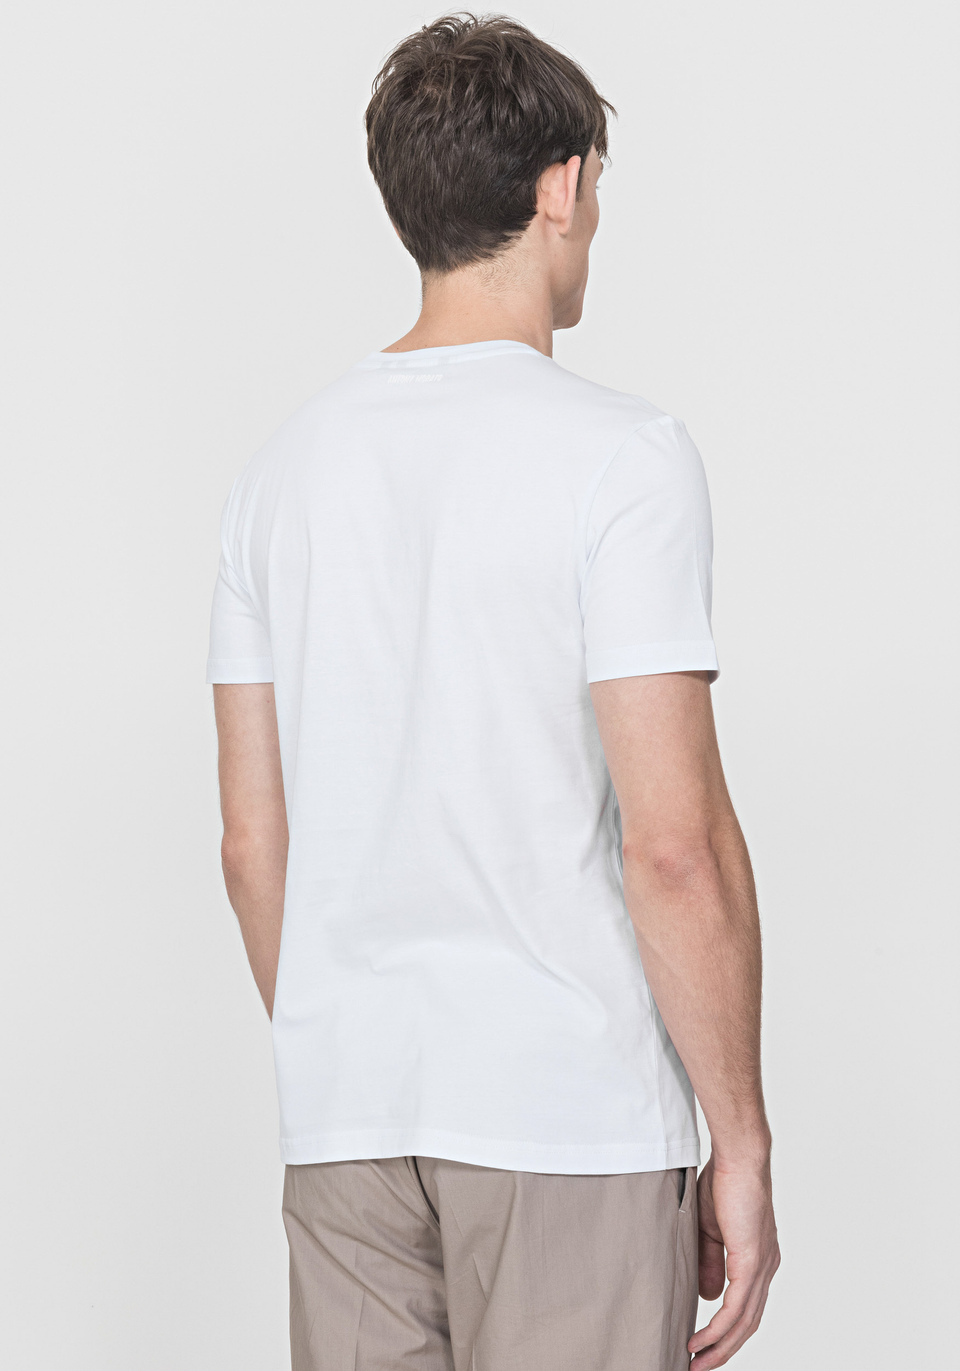 REGULAR-FIT T-SHIRT IN 100% COTTON WITH NEON HAND PRINT DESIGN - Antony Morato Online Shop